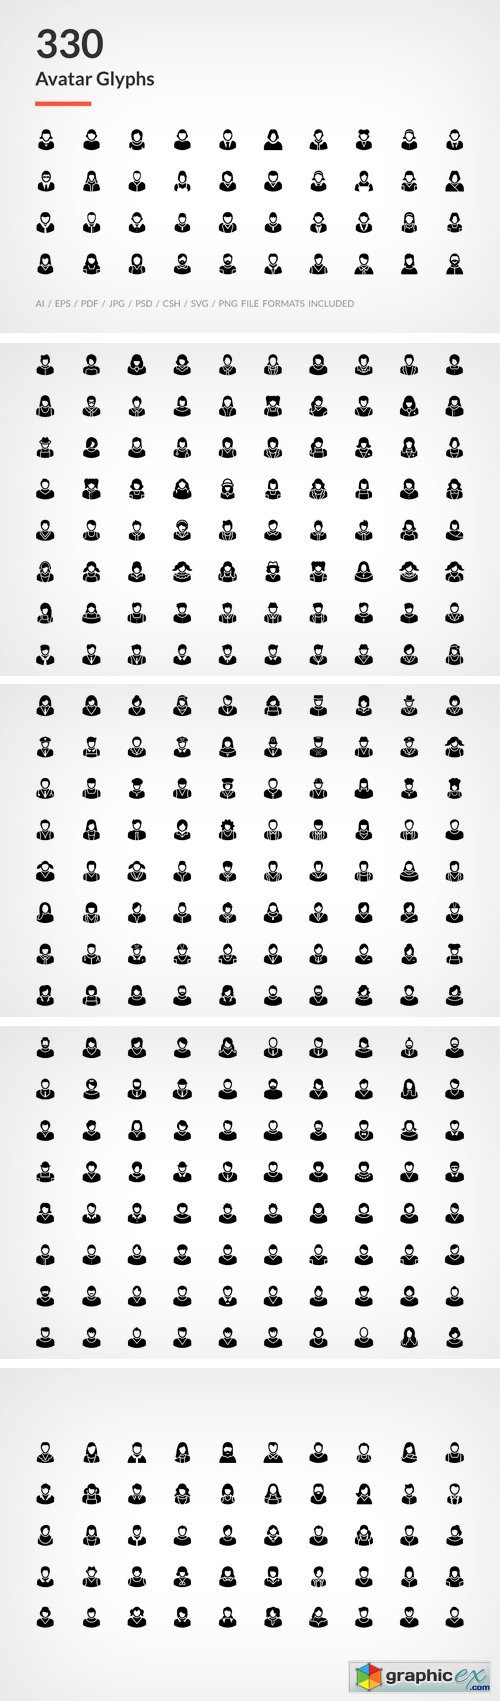 330 Avatar Glyph Icons